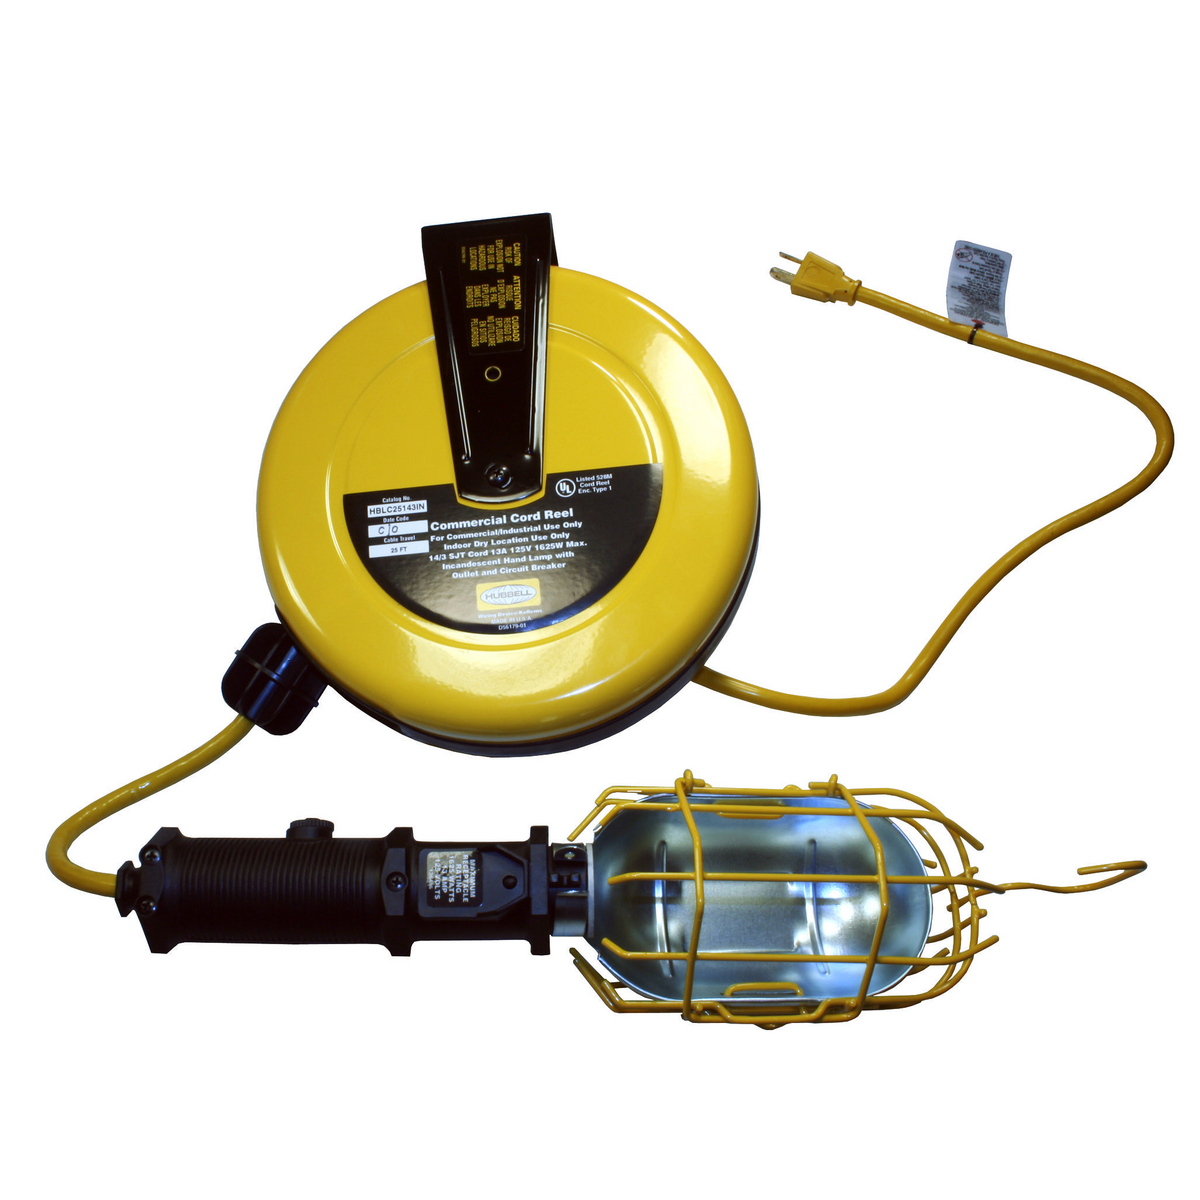 Hubbell Wiring Device-Kellems Cord Reels HBLI40104 HBLI40104